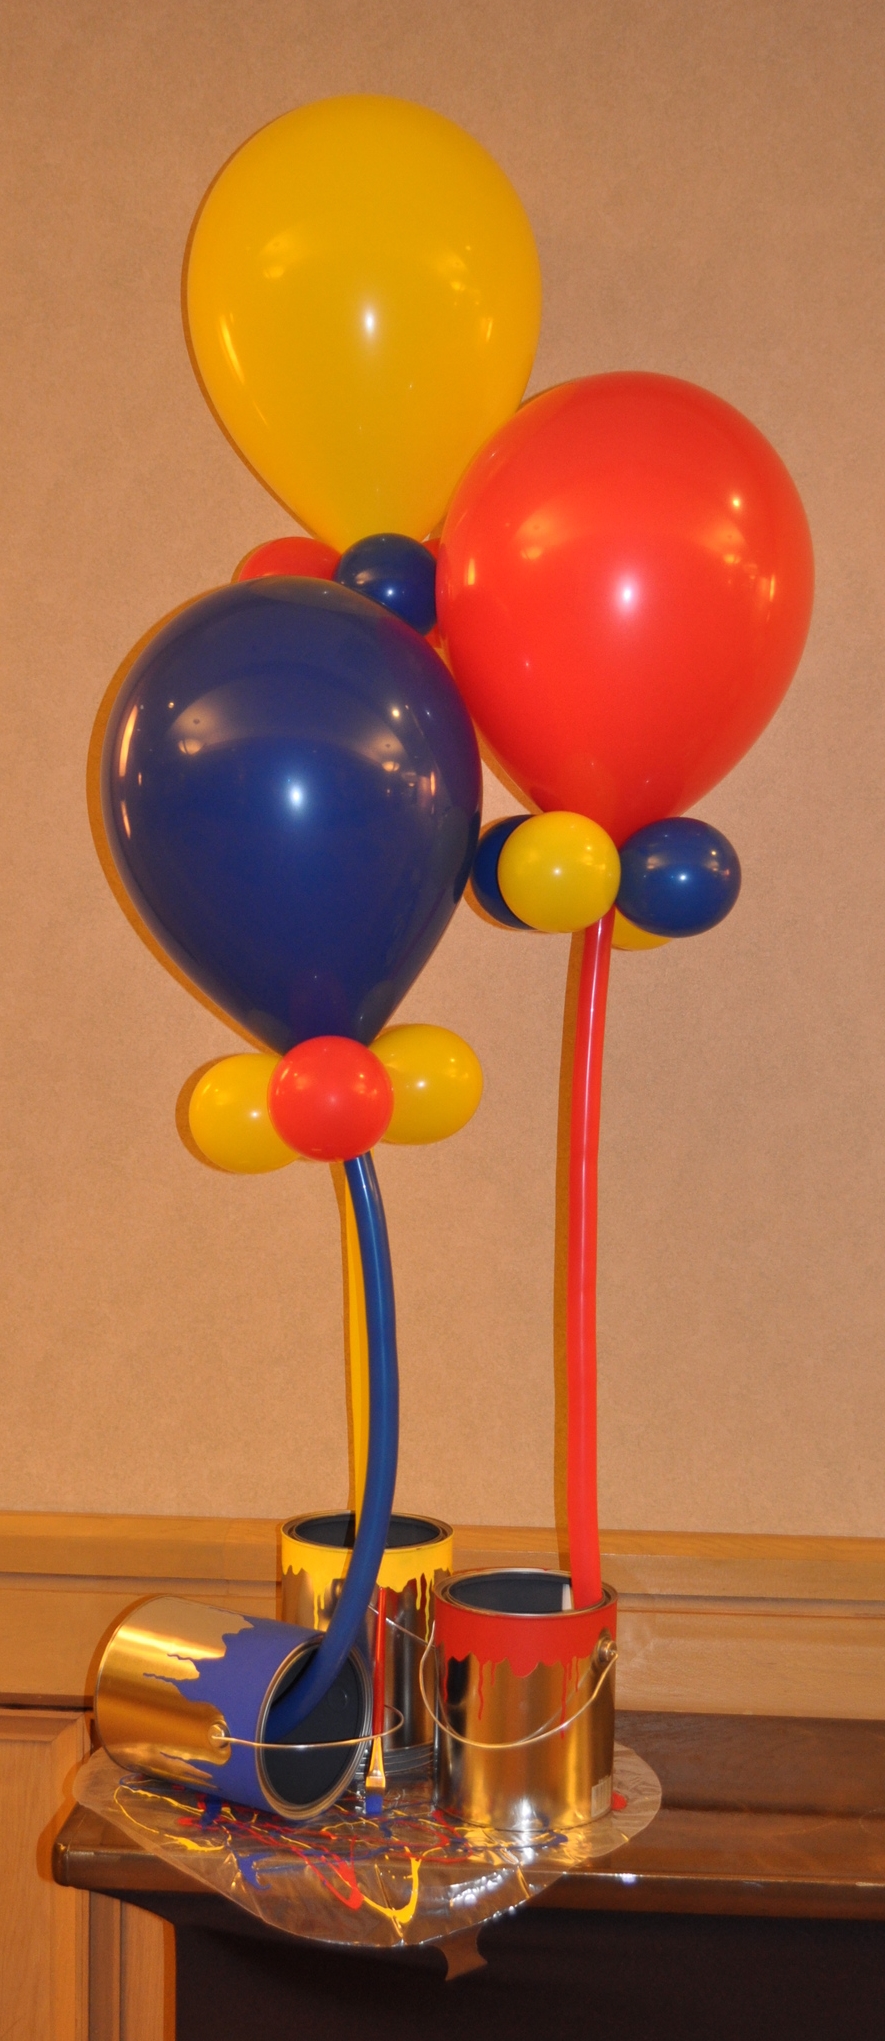 Balloon display celebrating an art event